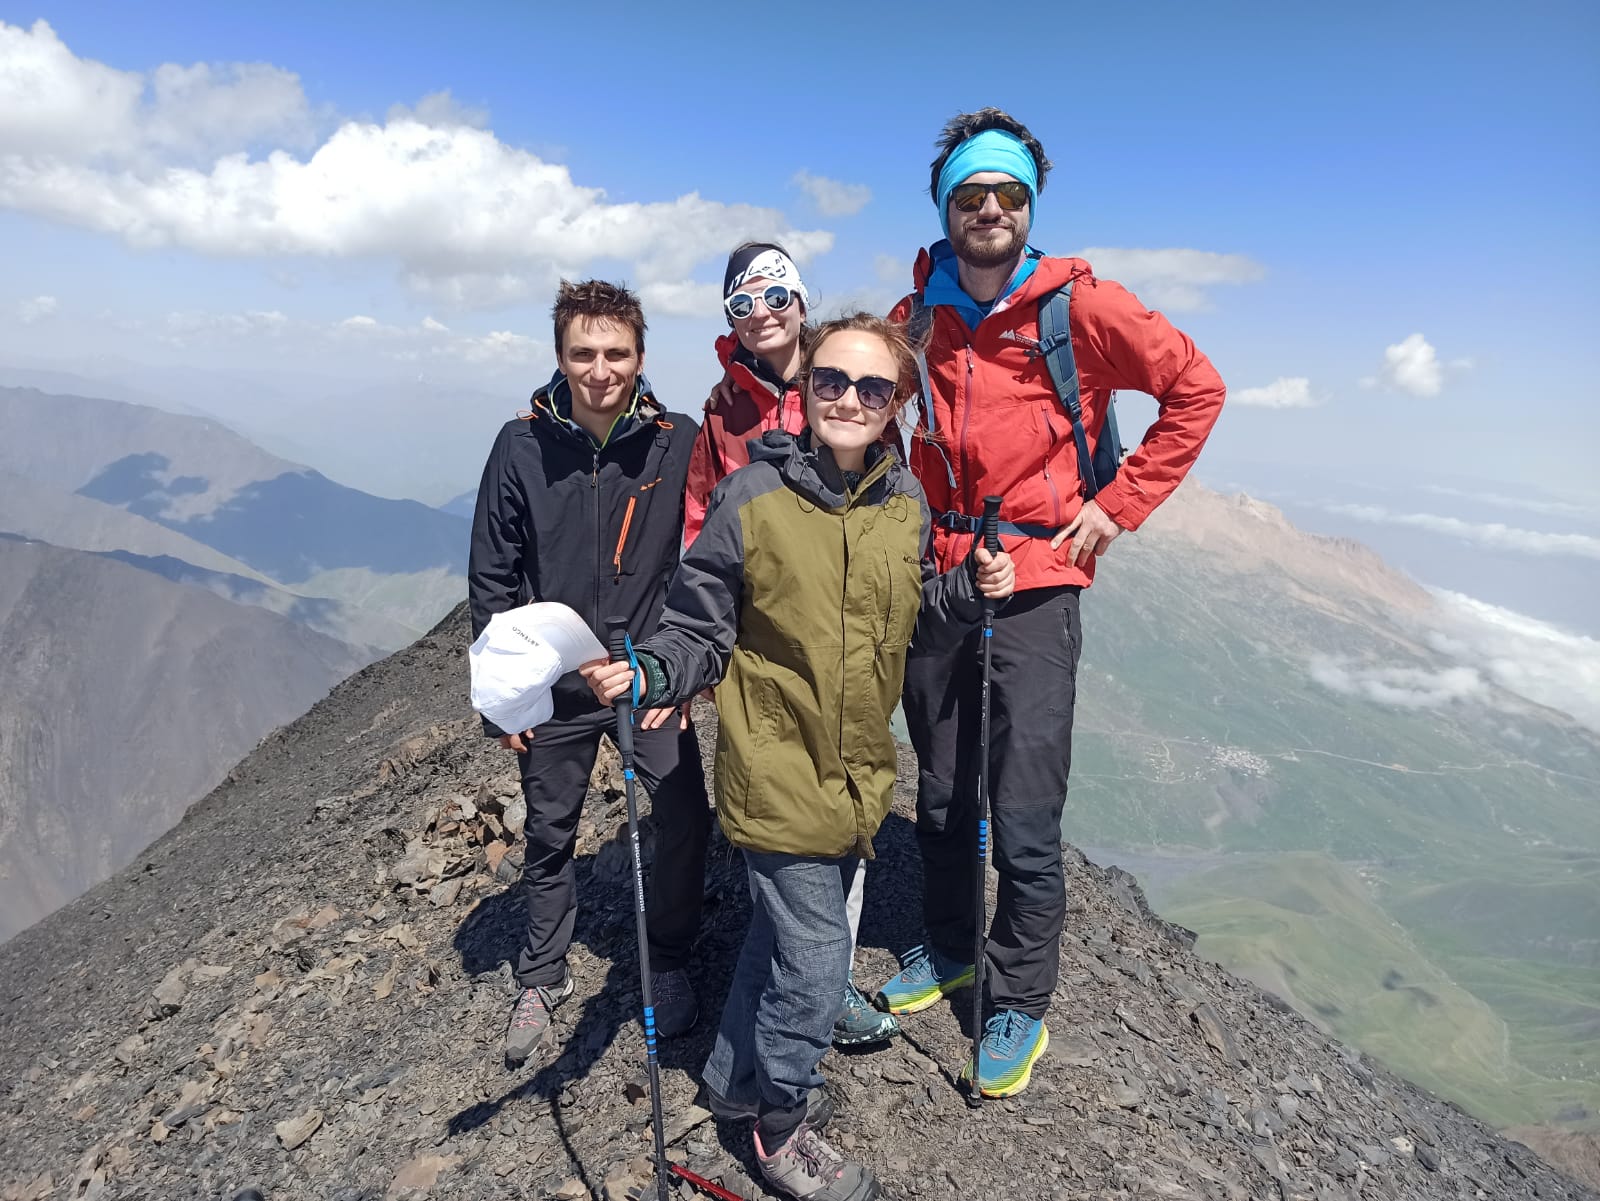 International Mountaineering Federation members climb high mountain peaks of Greater Caucasus